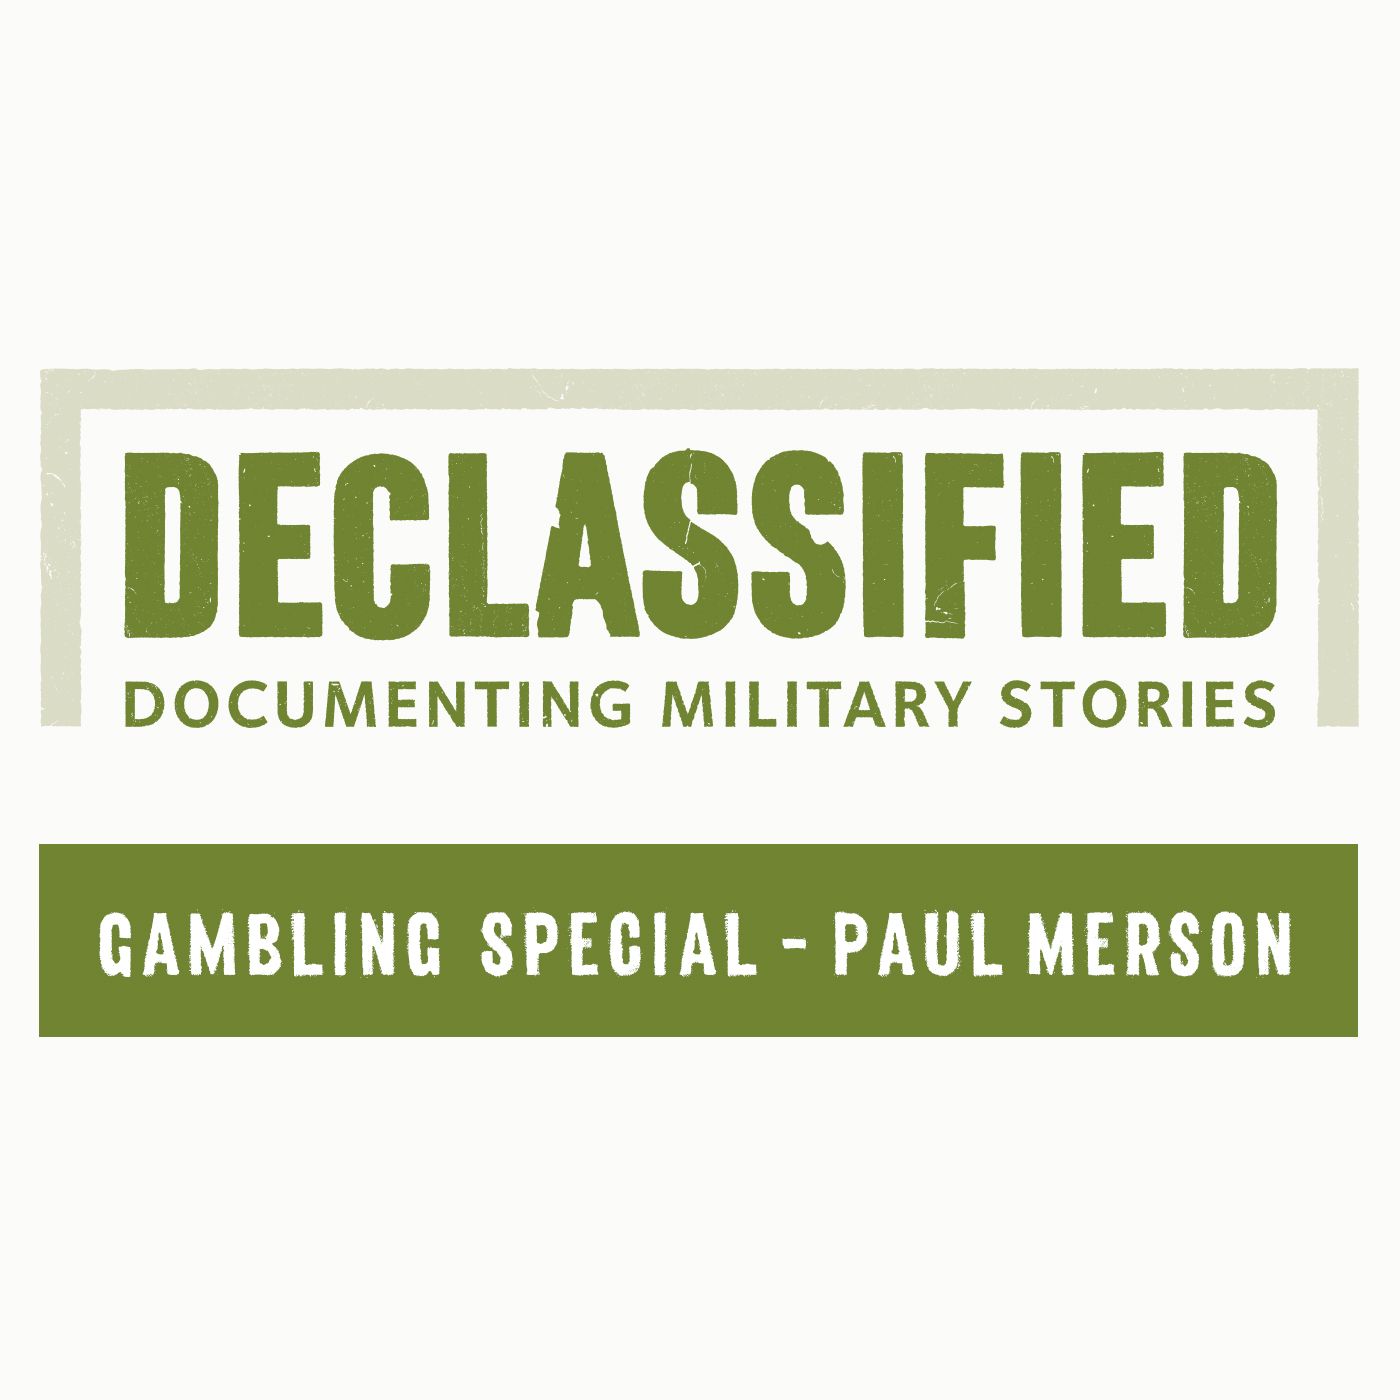 Gambling Special - Paul Merson